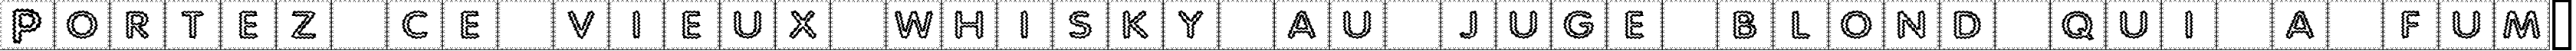 Пример написания шрифтом Quilted Indian текста на французском